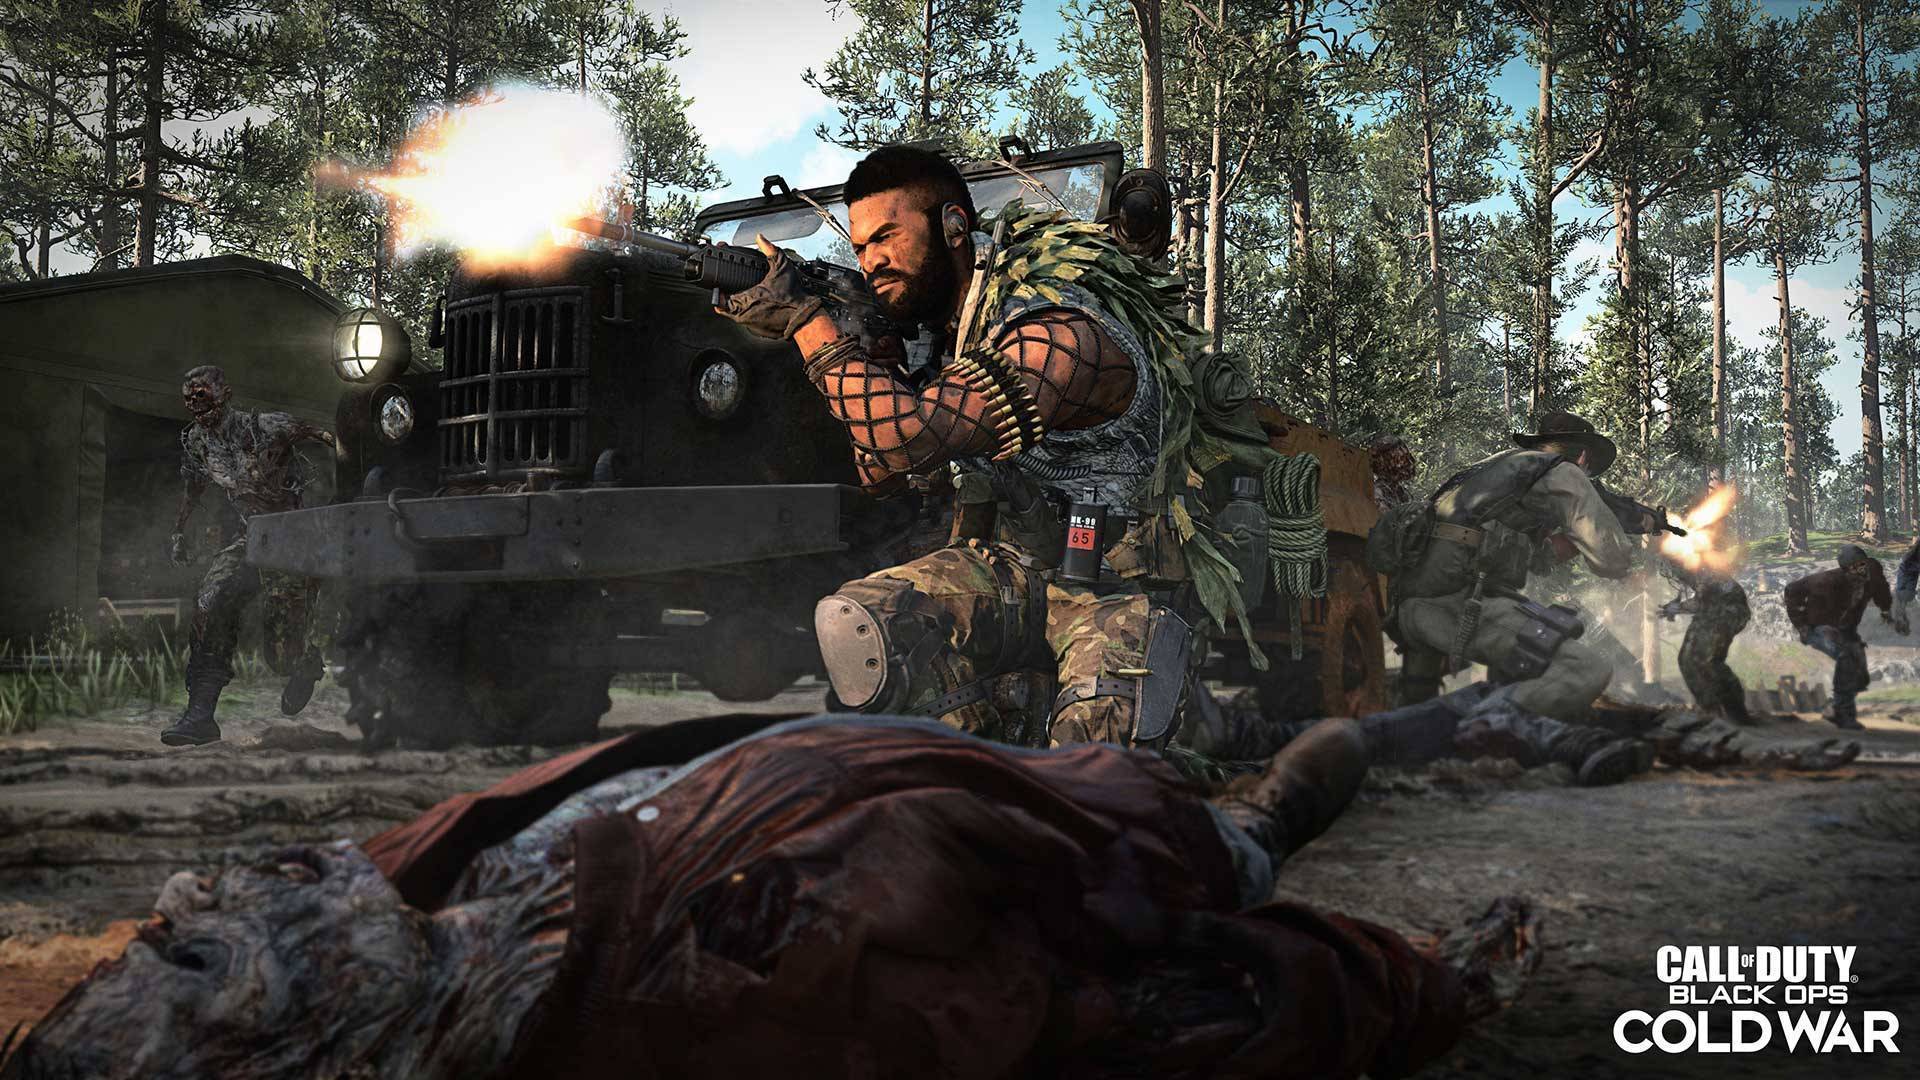 Buy Call of Duty Black Ops Cold War Rockstar Set PC CD Key from $2.92 - Cheapest Price - CDKeyZ.com